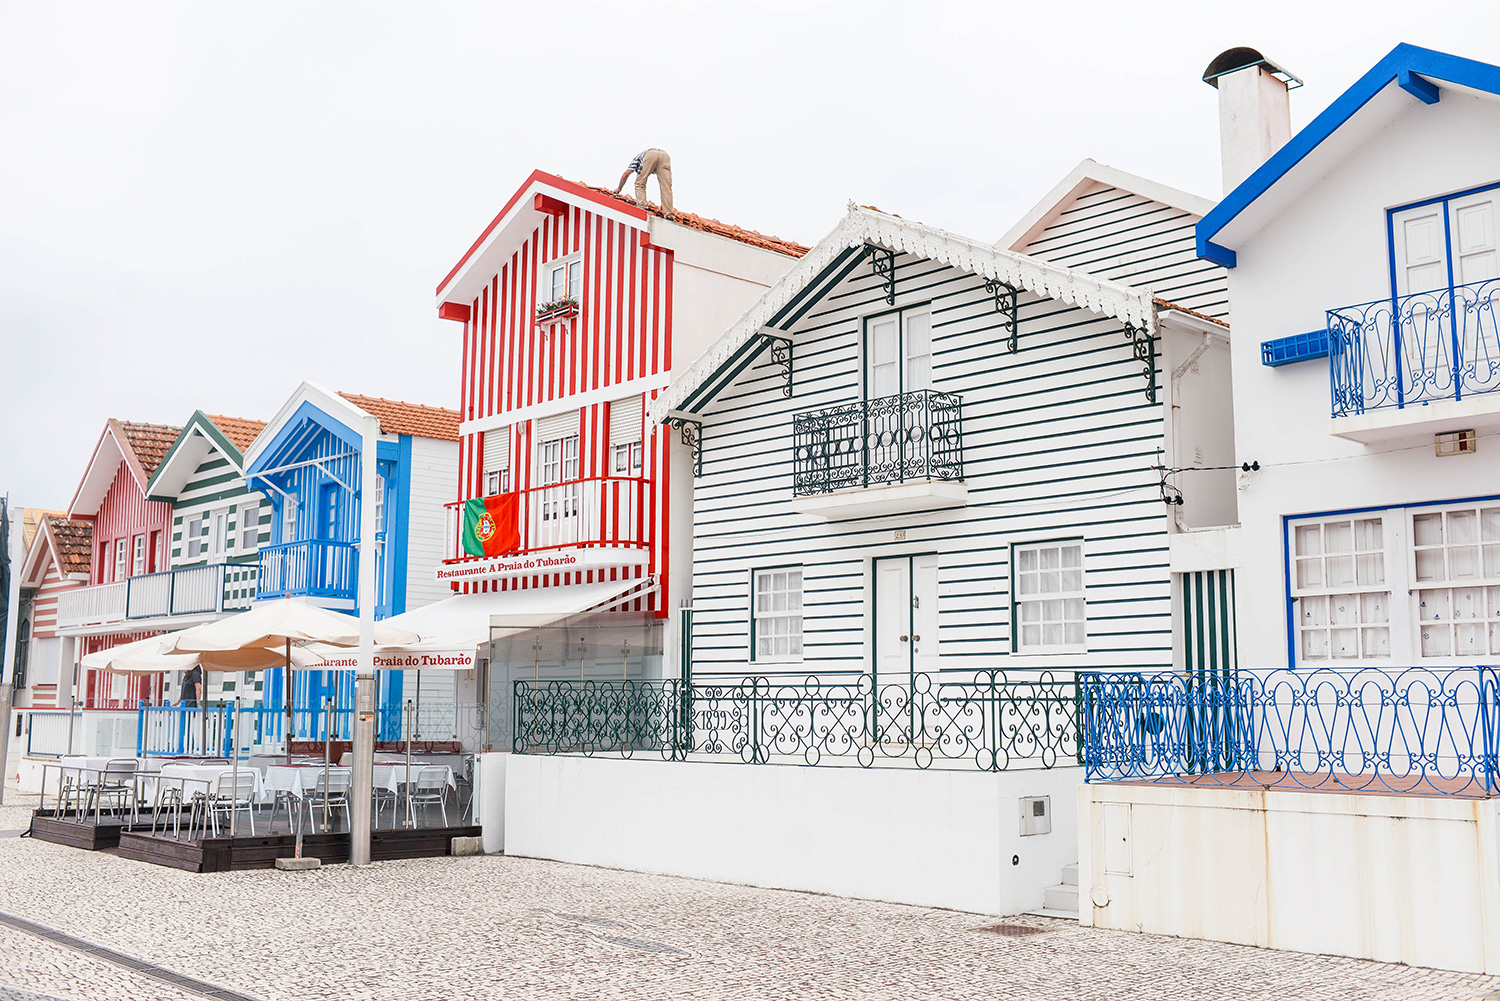 Exploring Costa Nova: Photos of the beach, striped houses and more!